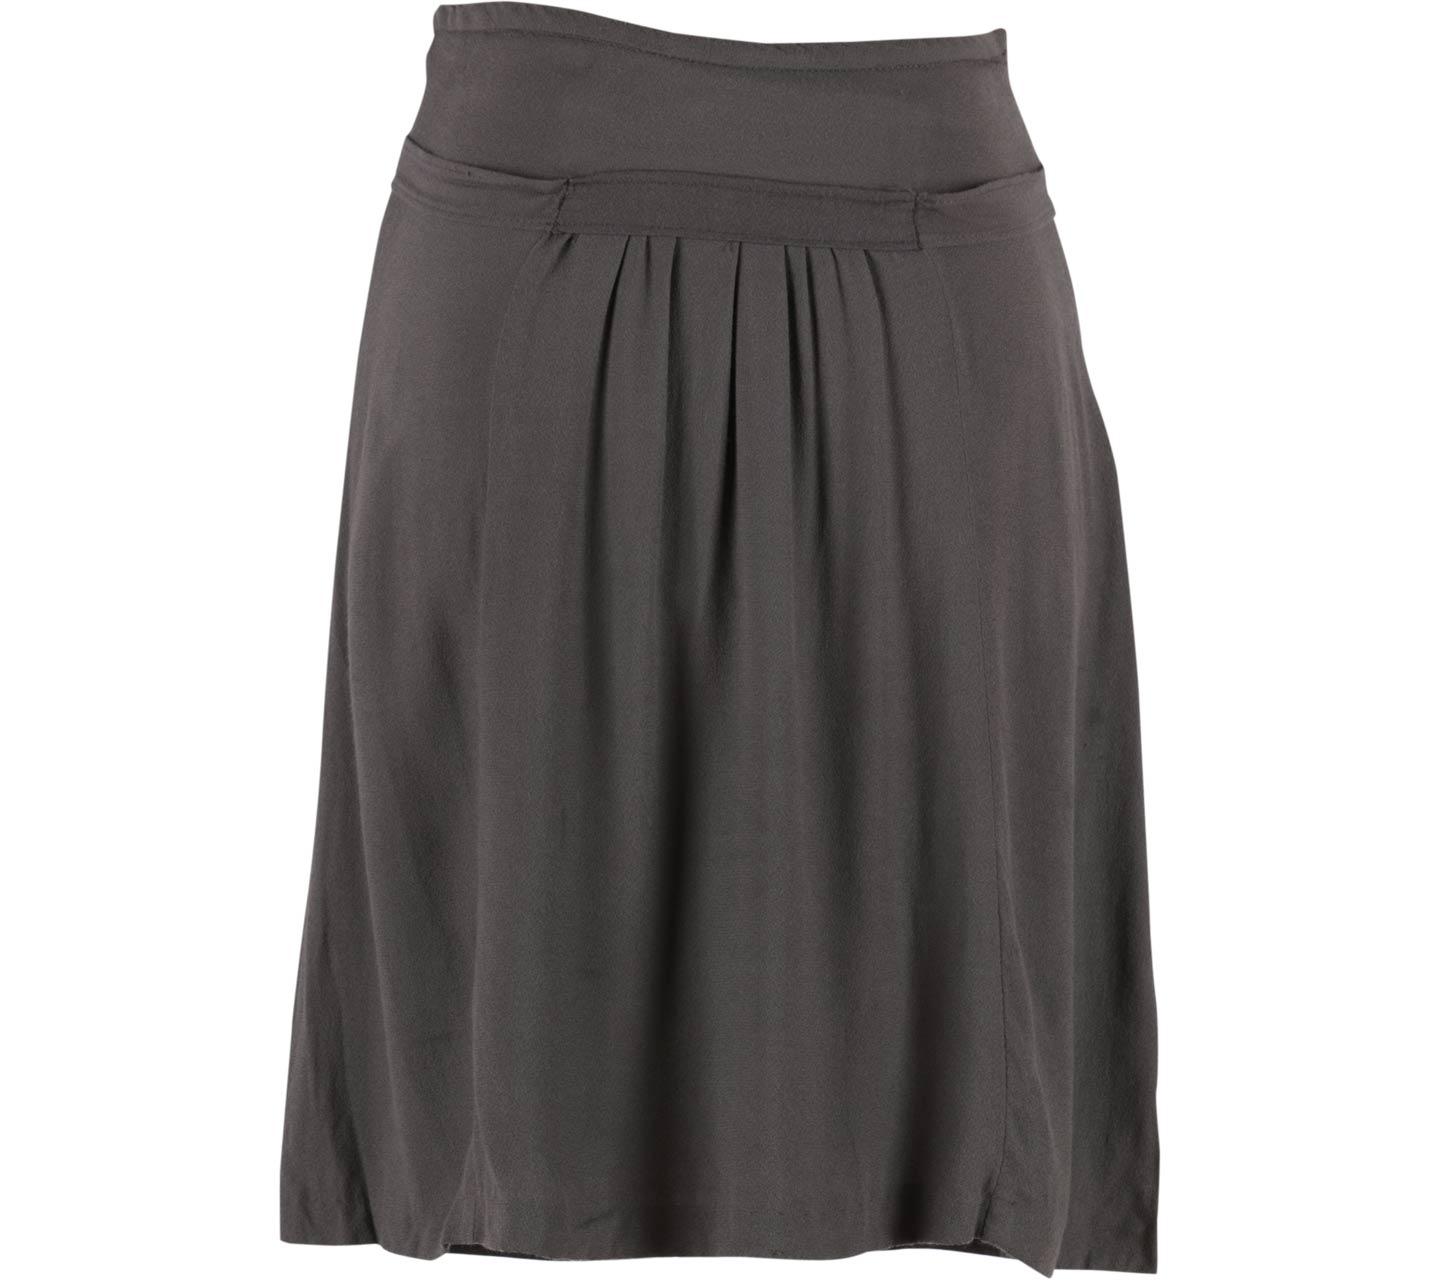 Zara Grey Tied Midi Skirt